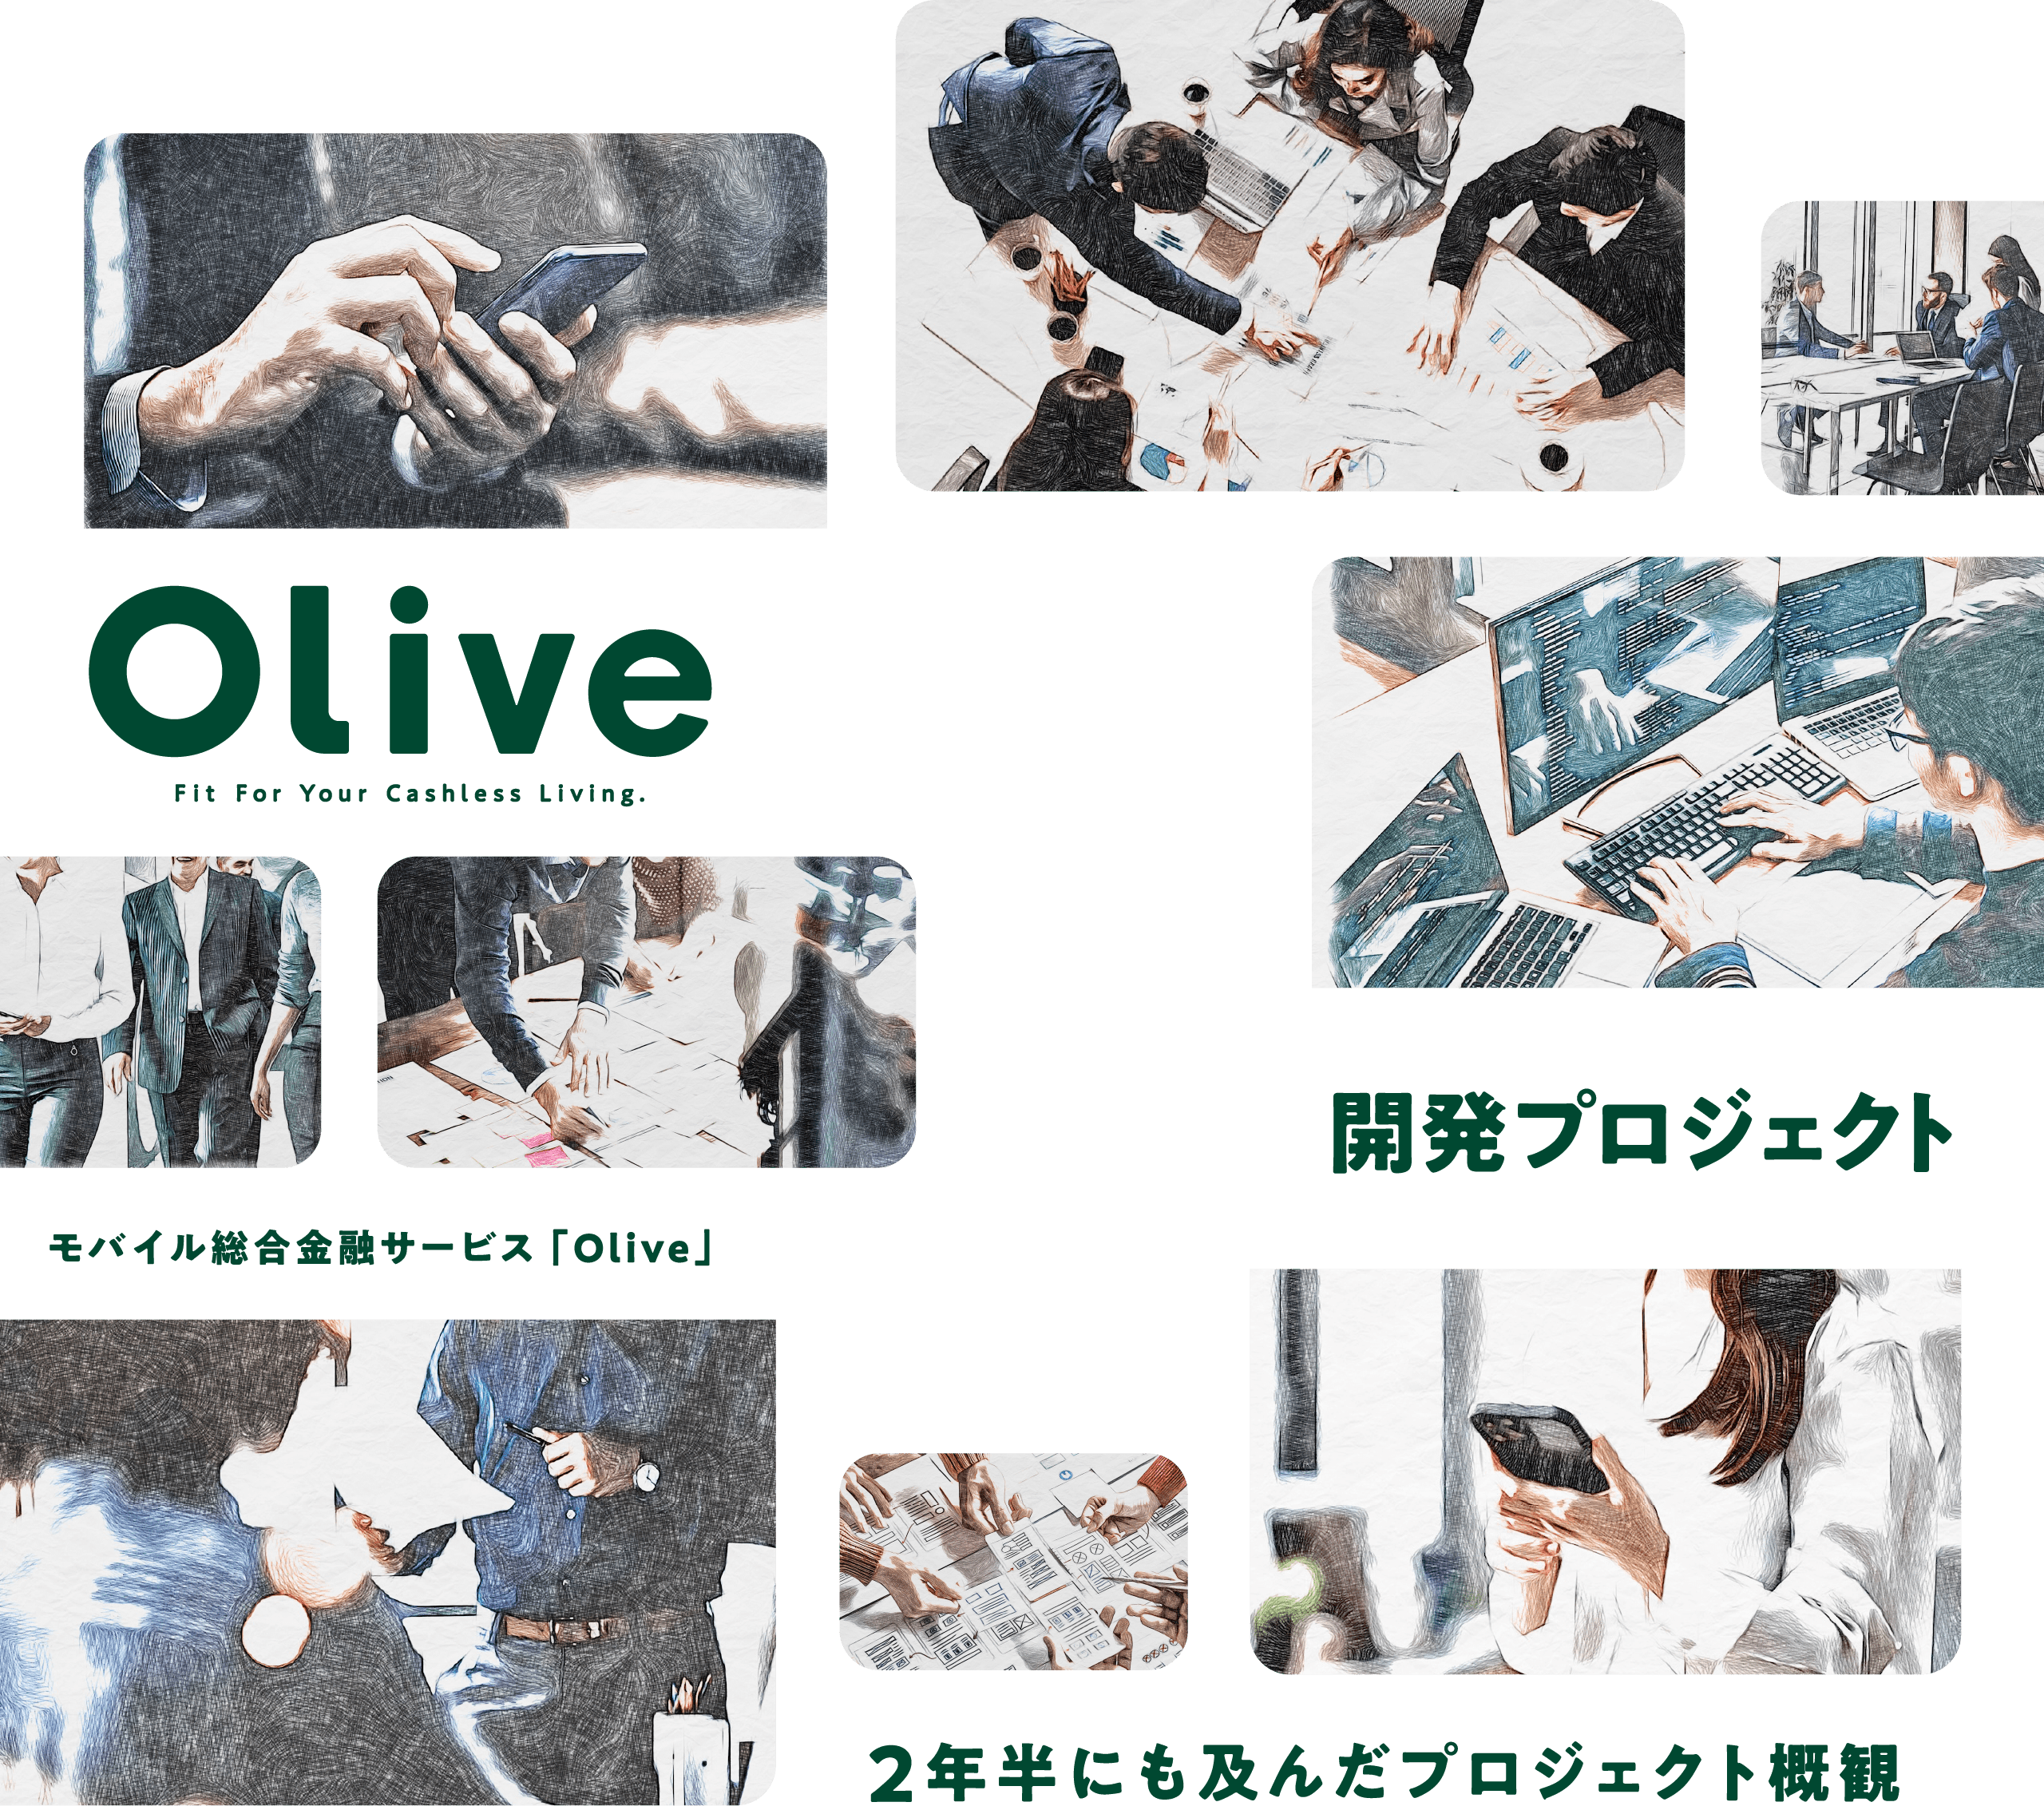 Olive Fit For Your Cashless Living モバイル総合金融サービス 「Olive」 開発プロジェクト 2年半にも及んだプロジェクト概観